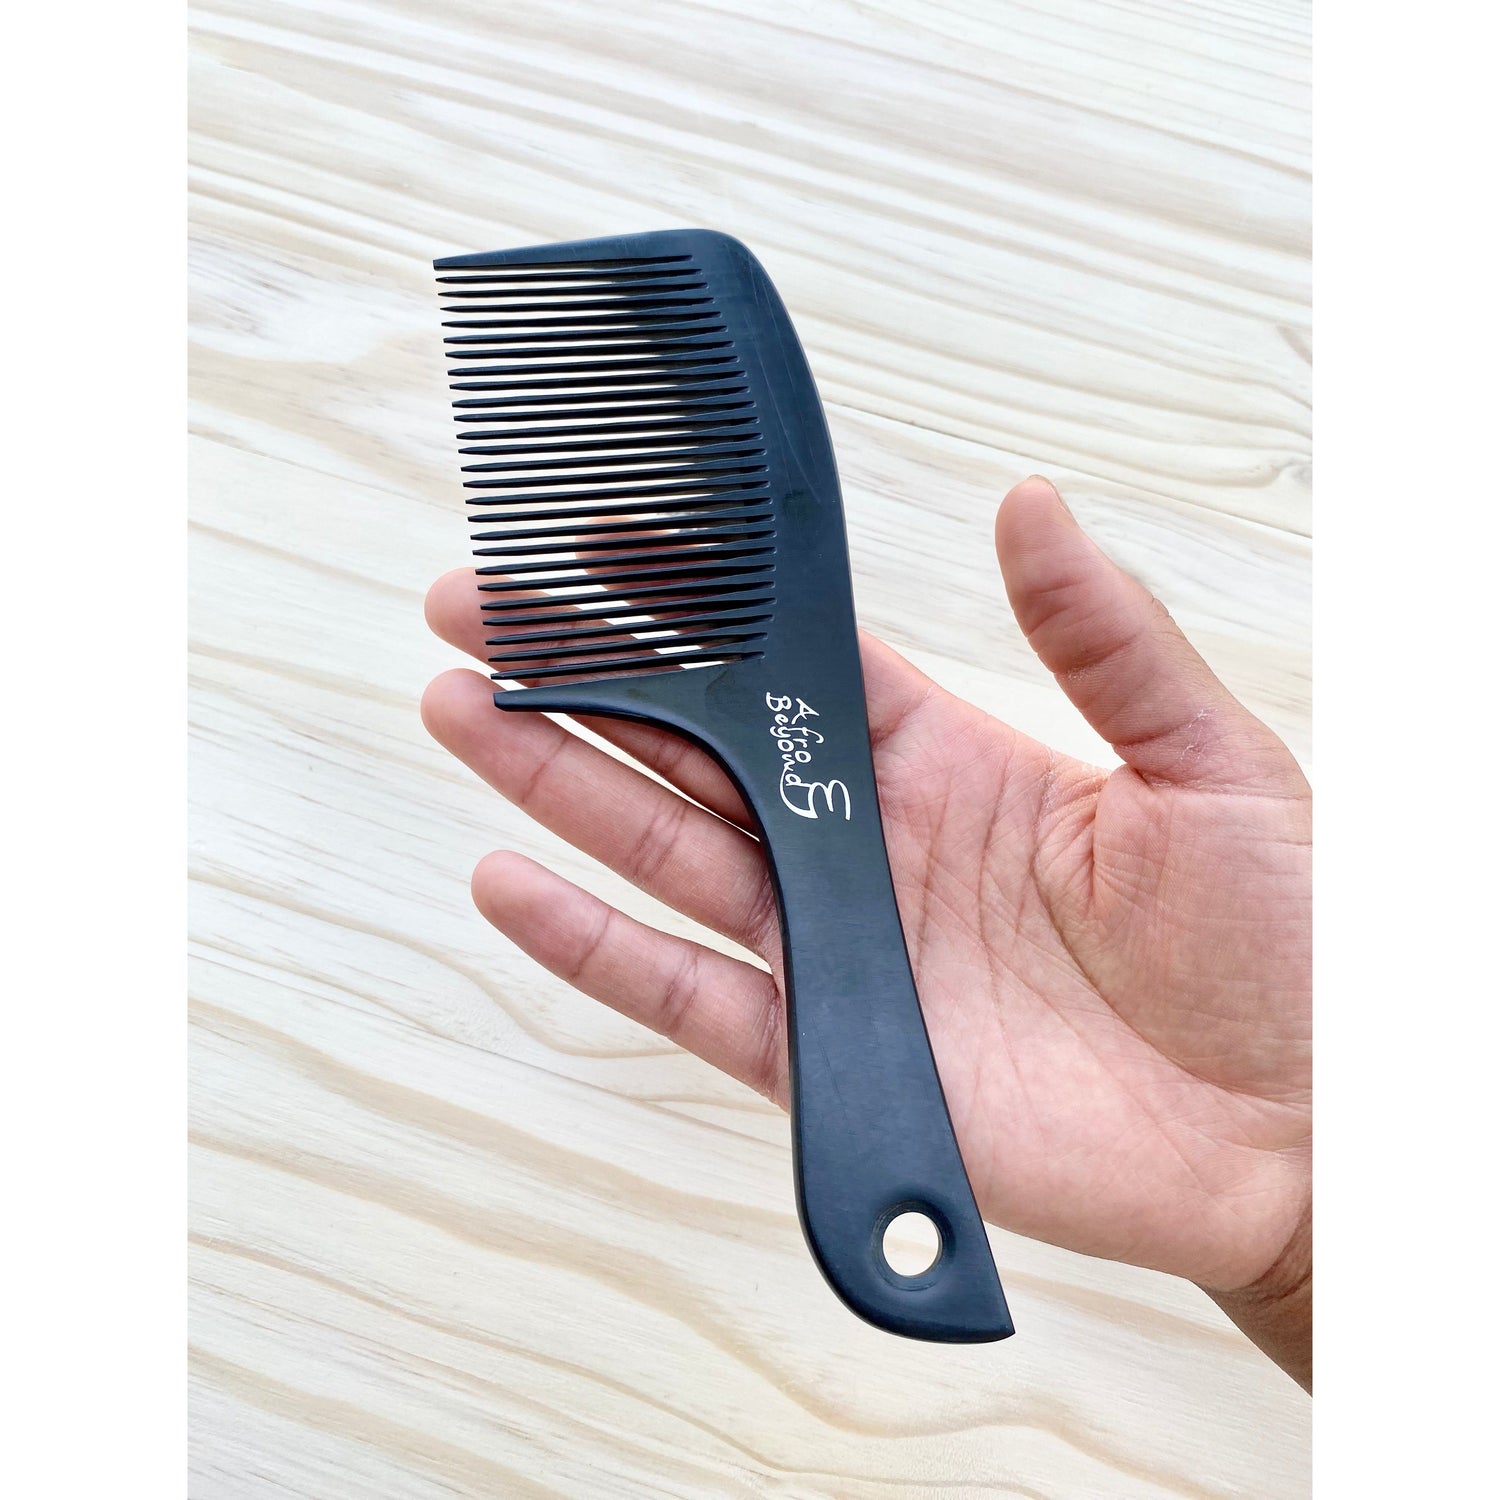 The Lucette detangling comb